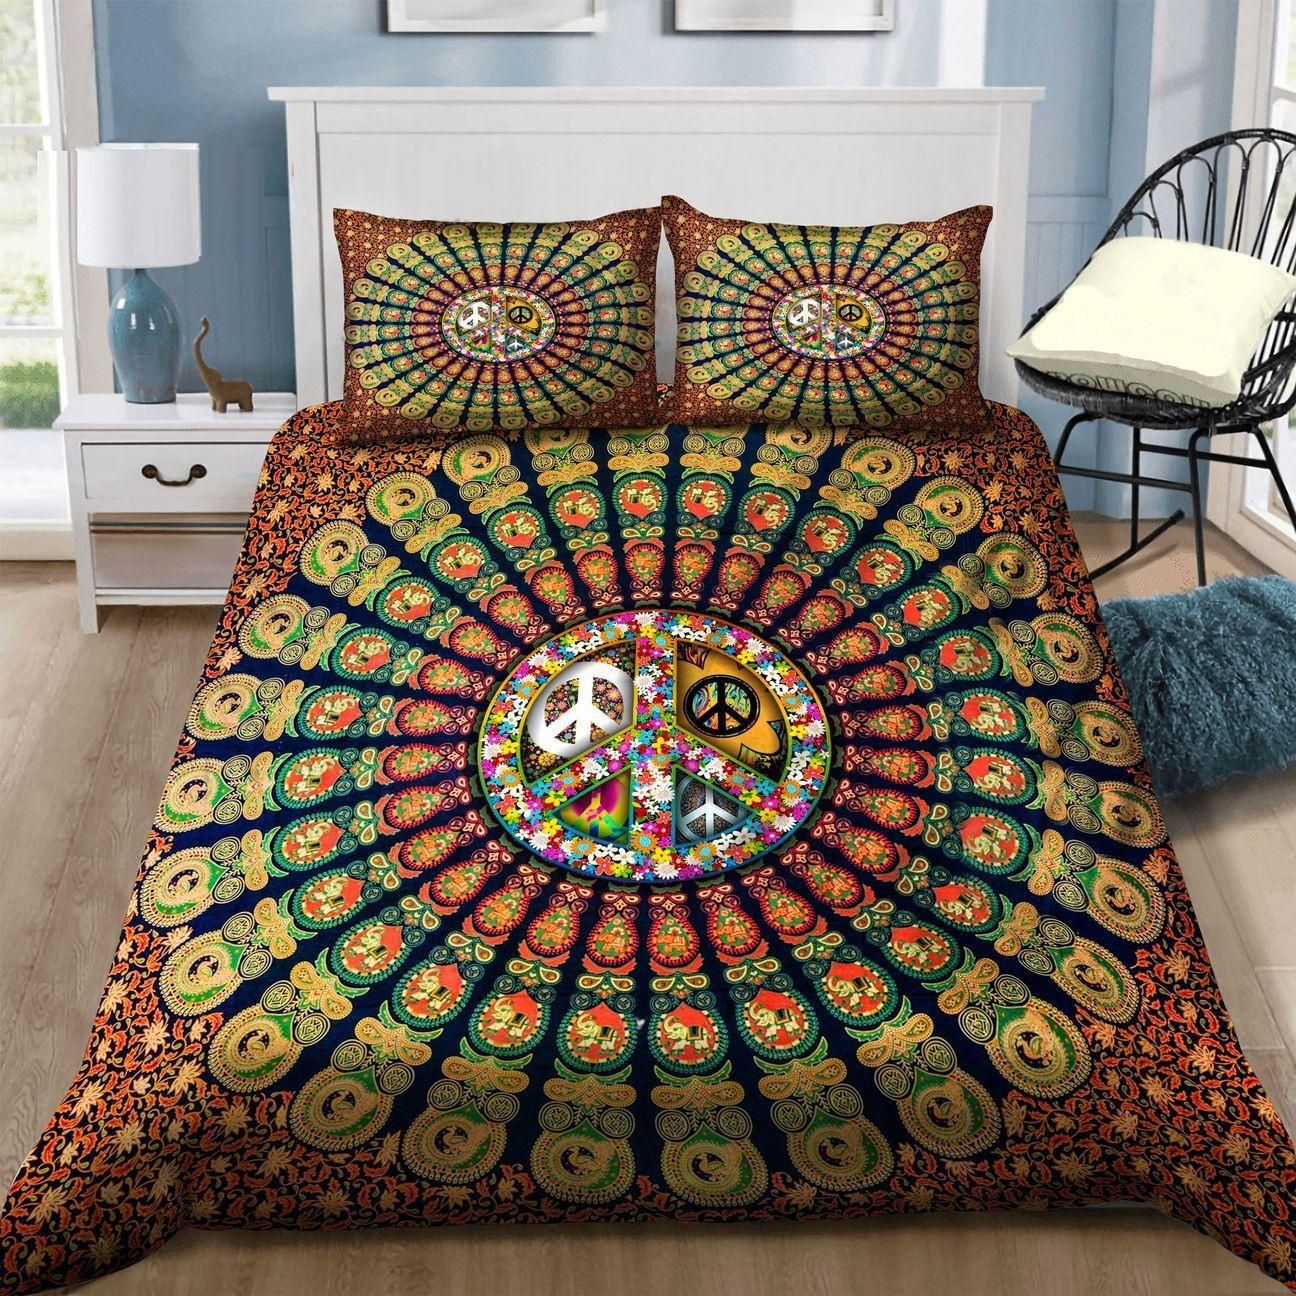 Hippie Patterns With Floral Symbol Duvet Cover Bedding Set